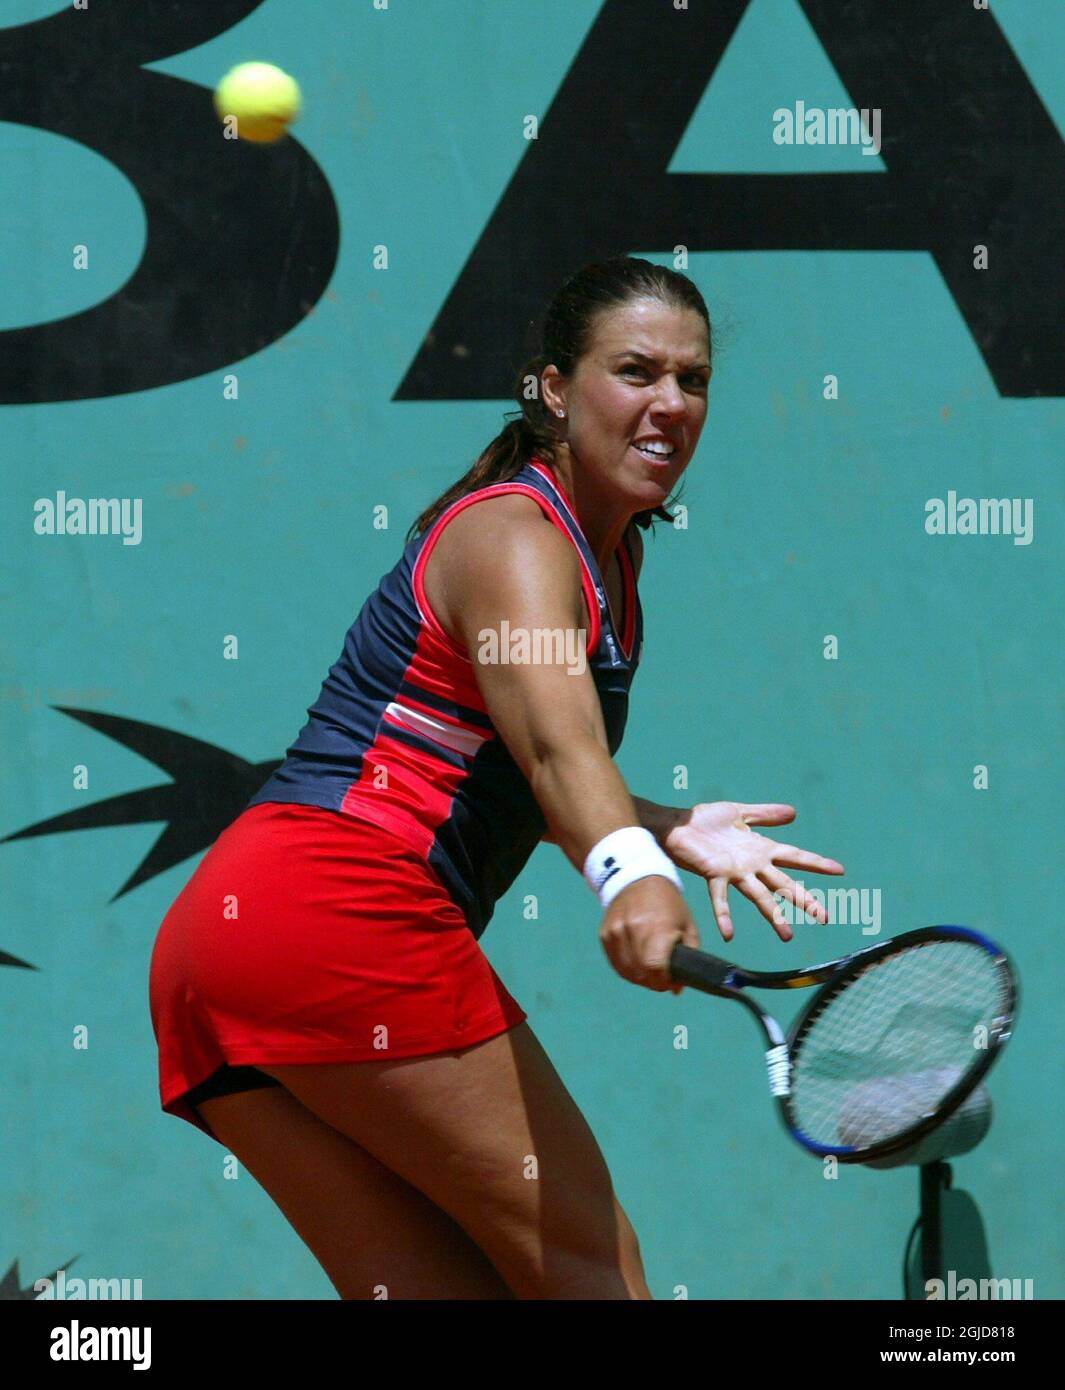 Jennifer capriati tennis hi-res stock photography and images - Alamy